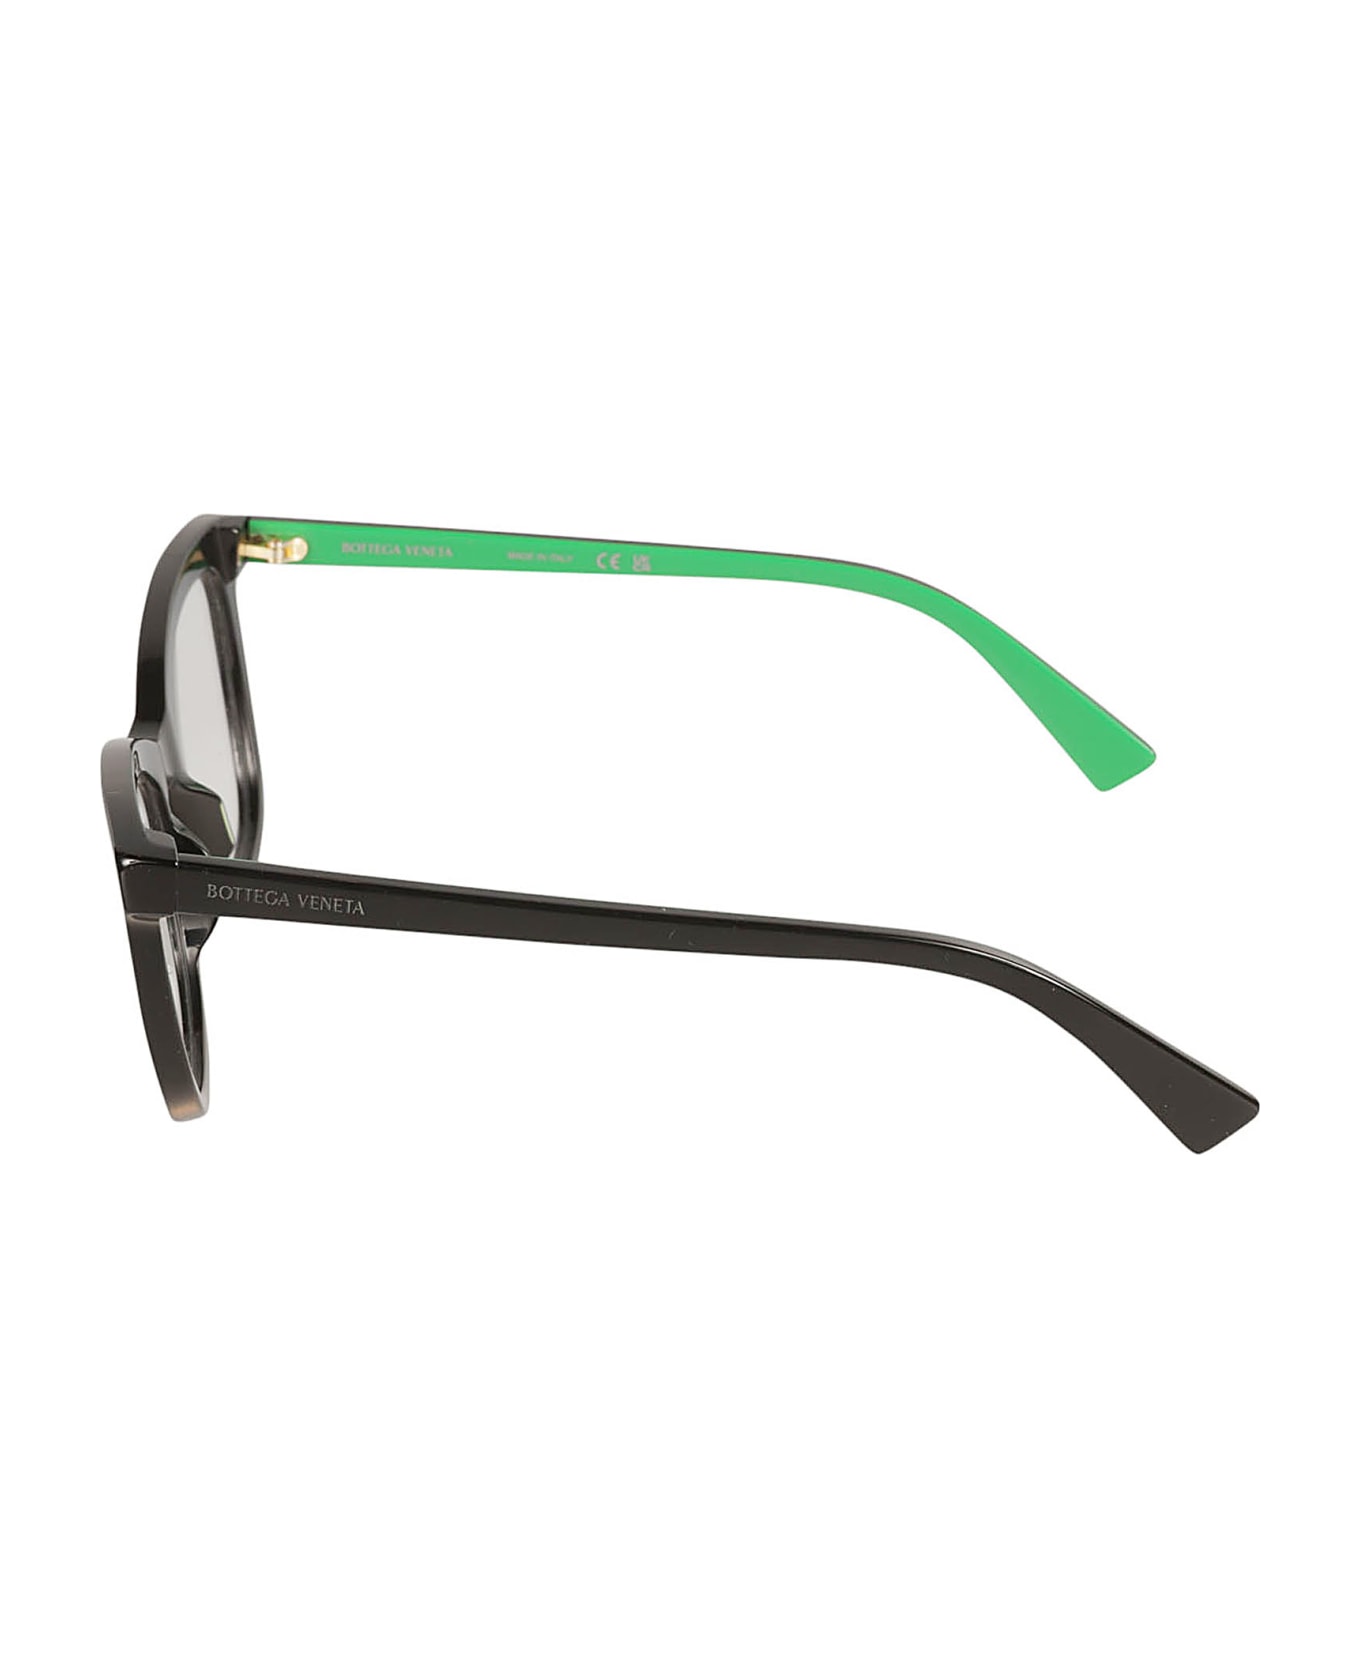 Bottega Veneta Eyewear Square Frame Logo Glasses - Black/Transparent